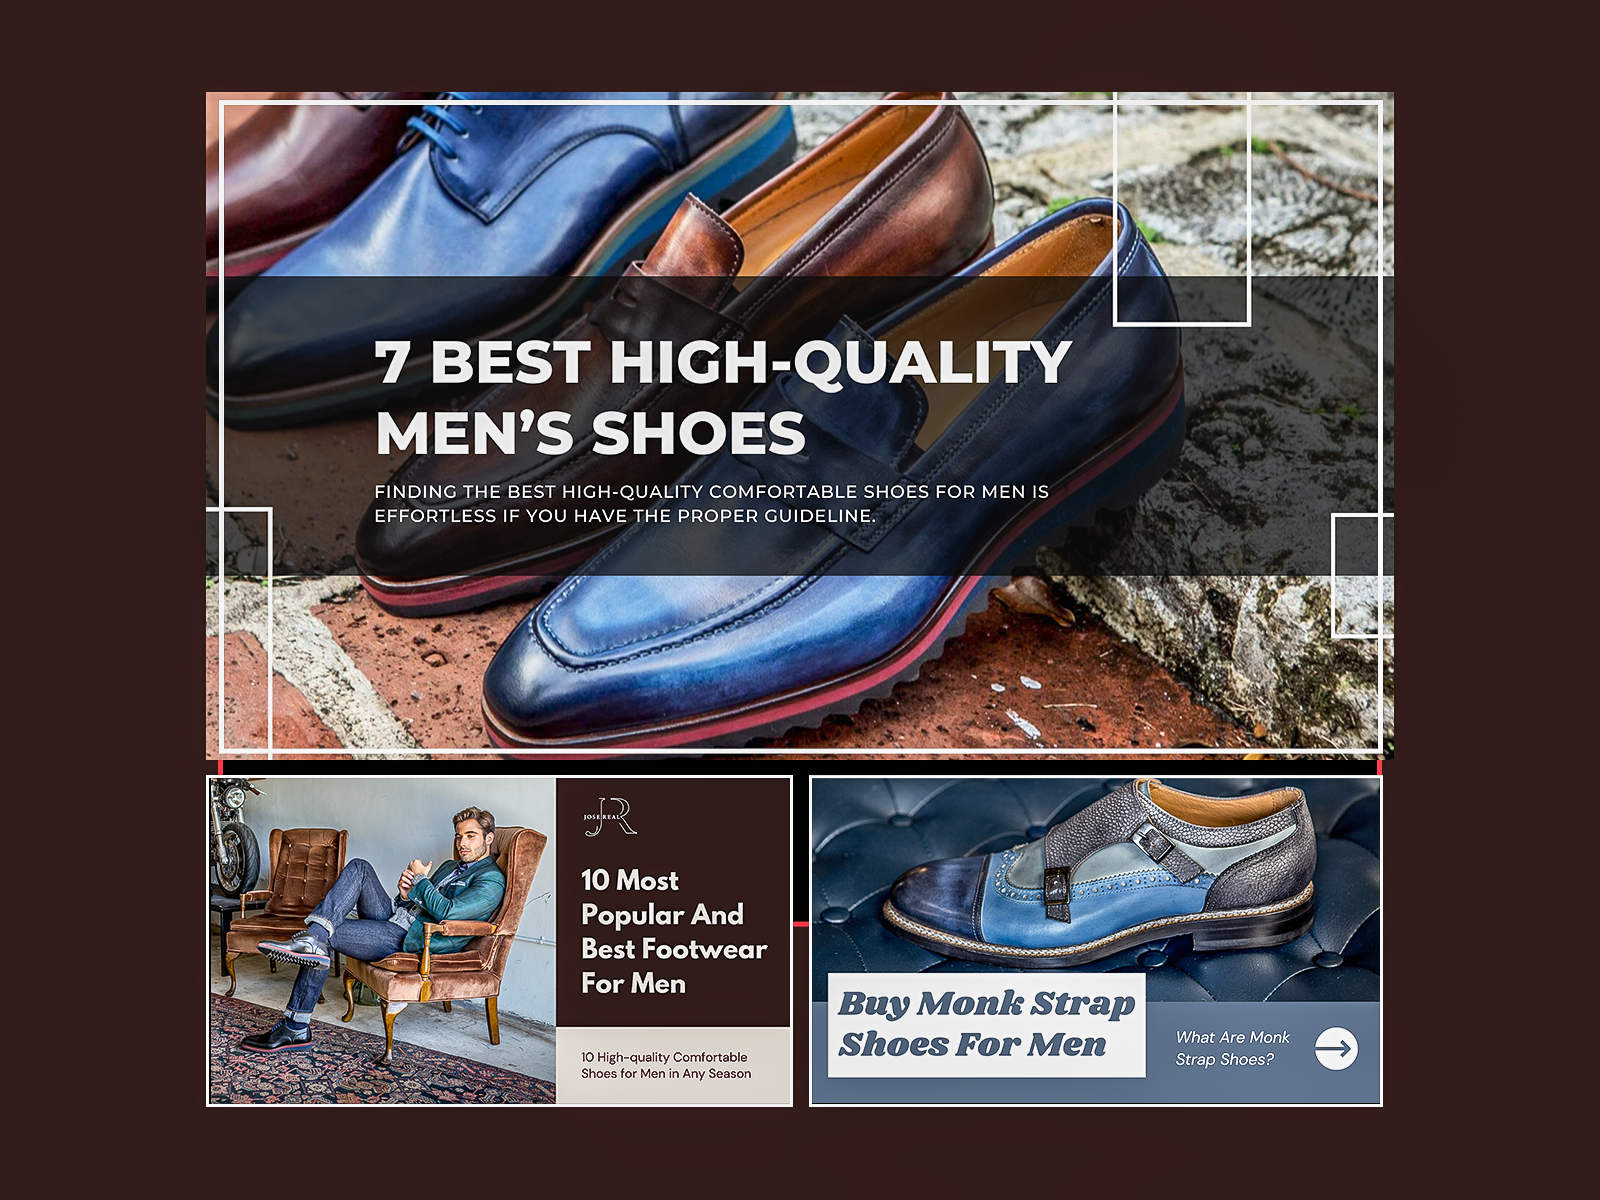 Jose Real Shoes - Modern Blog Image Design by Amit Biswas for Freelancers  HUB on Dribbble